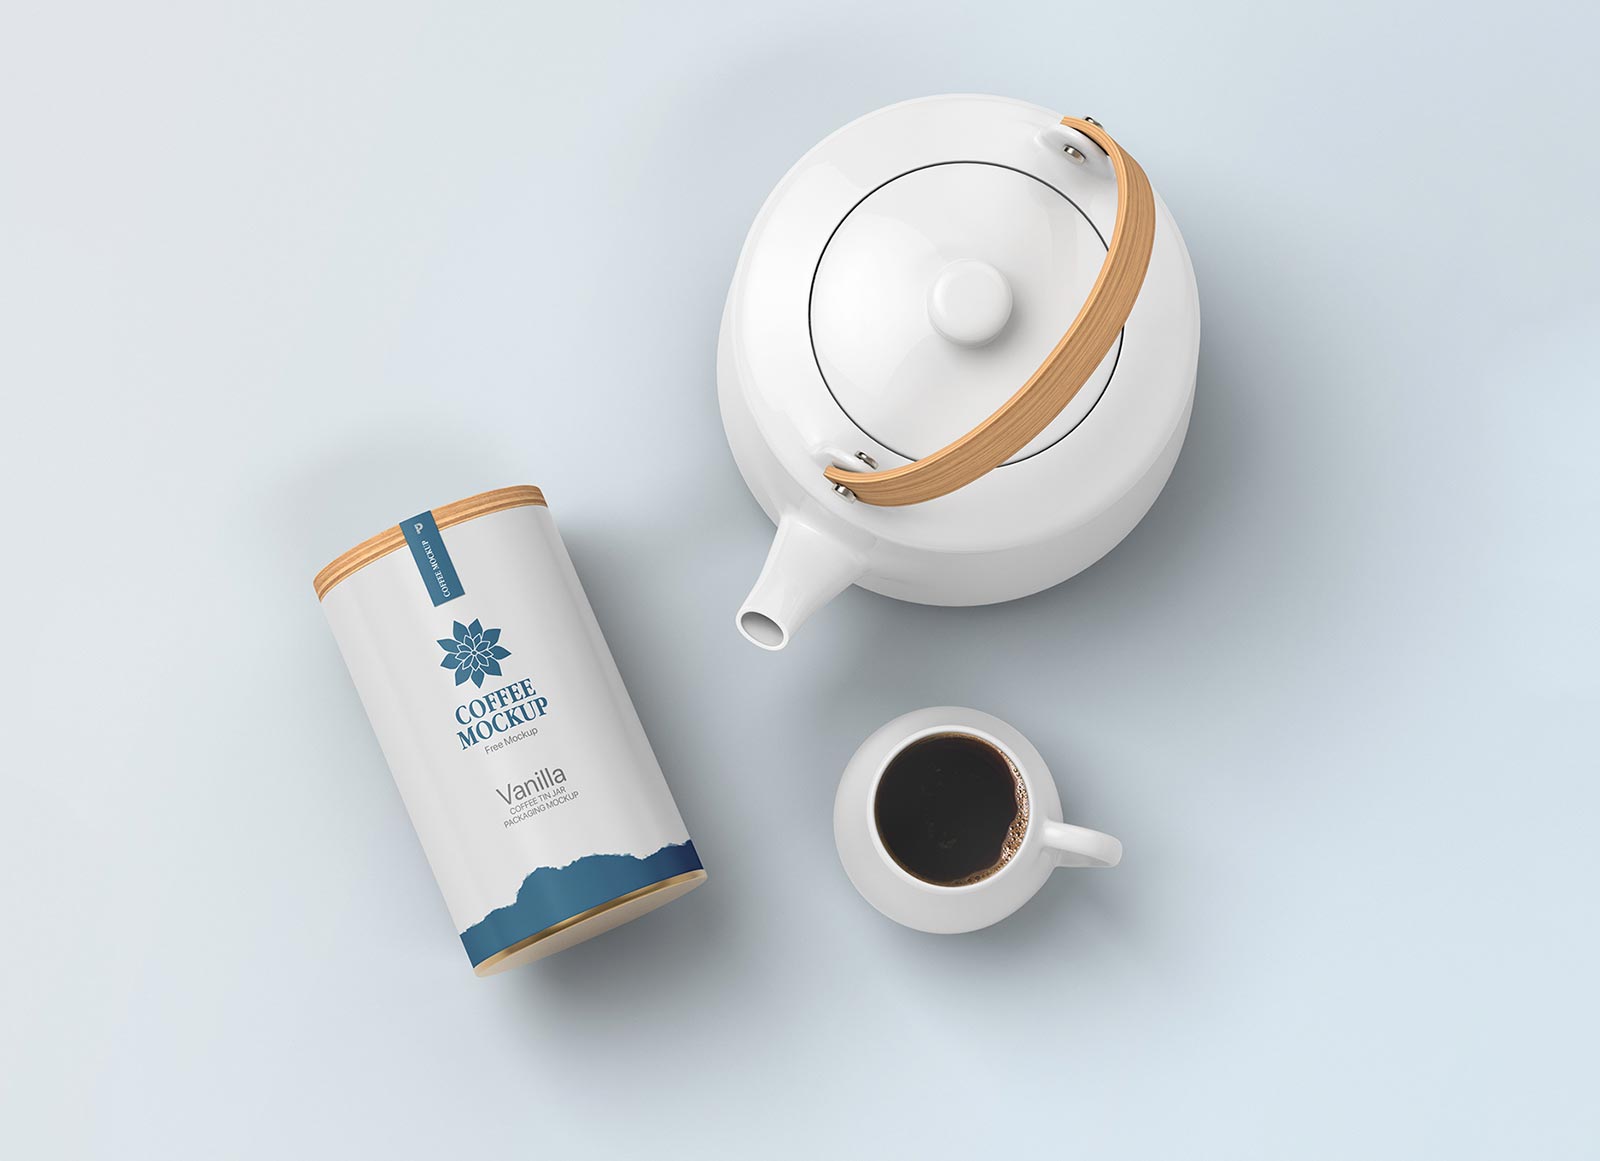 Free-Coffee-Tin-Jar-Packaging-Mockup-PSD